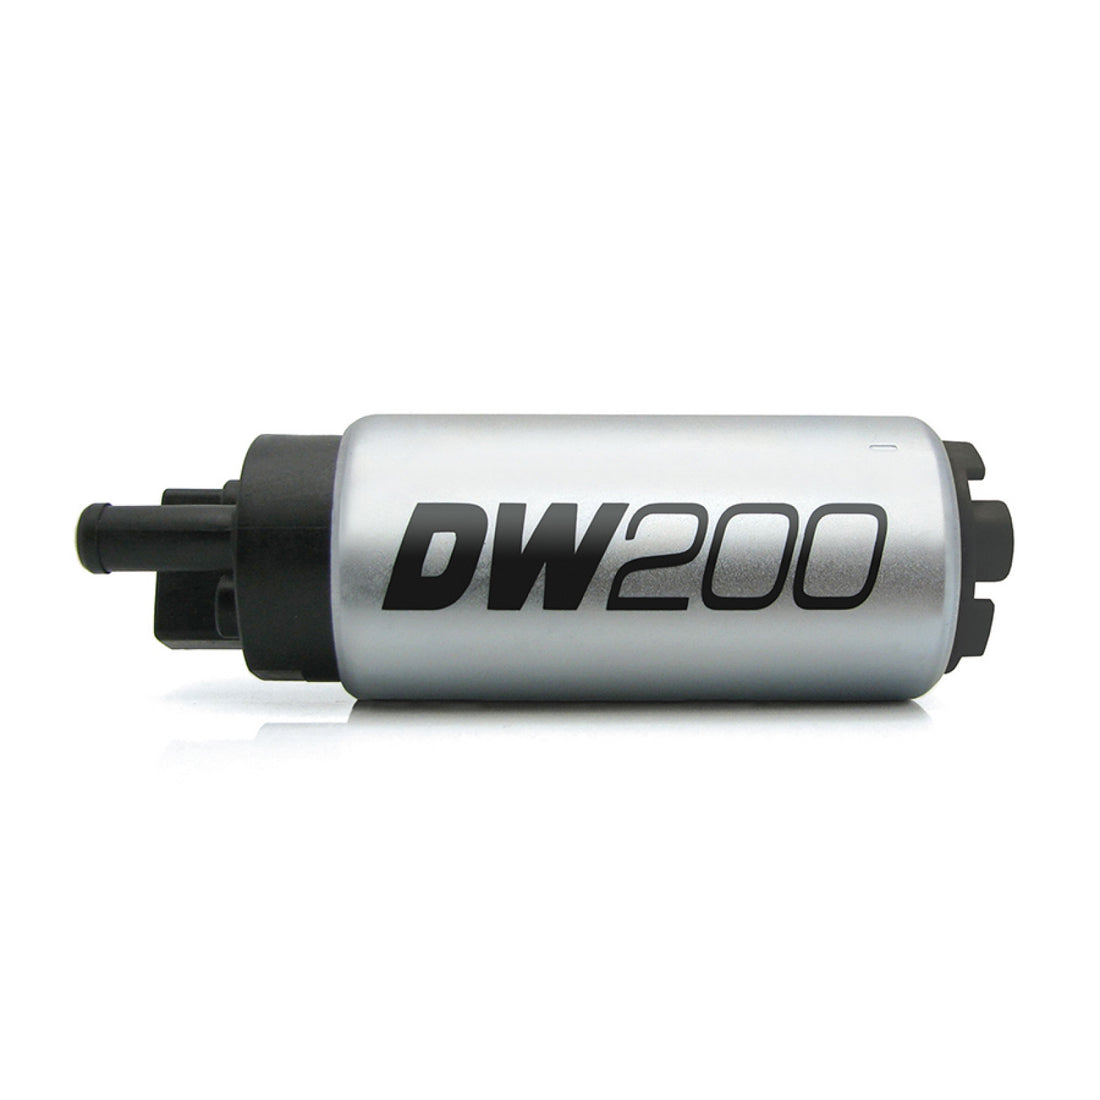 Deatschwerks DW200 255lph Fuel Pump for 03-08 Infinity G35, 03-08 Nissan 35OZ, and 10-12 Subaru Legacy